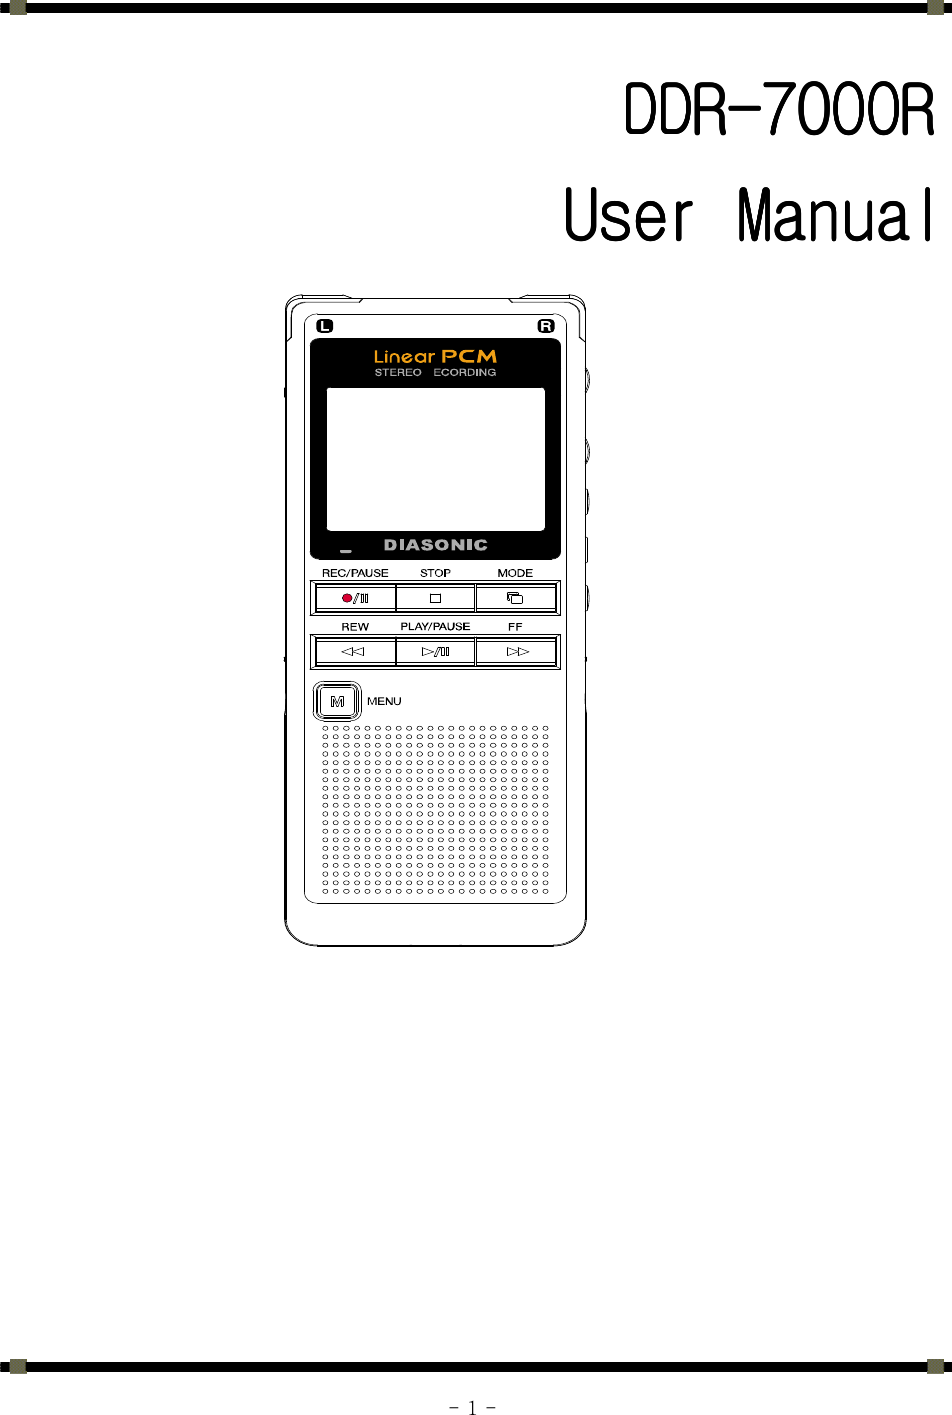      - 1 -  DDRDDRDDRDDR----7000700070007000RRRR    User ManualUser ManualUser ManualUser Manual                    